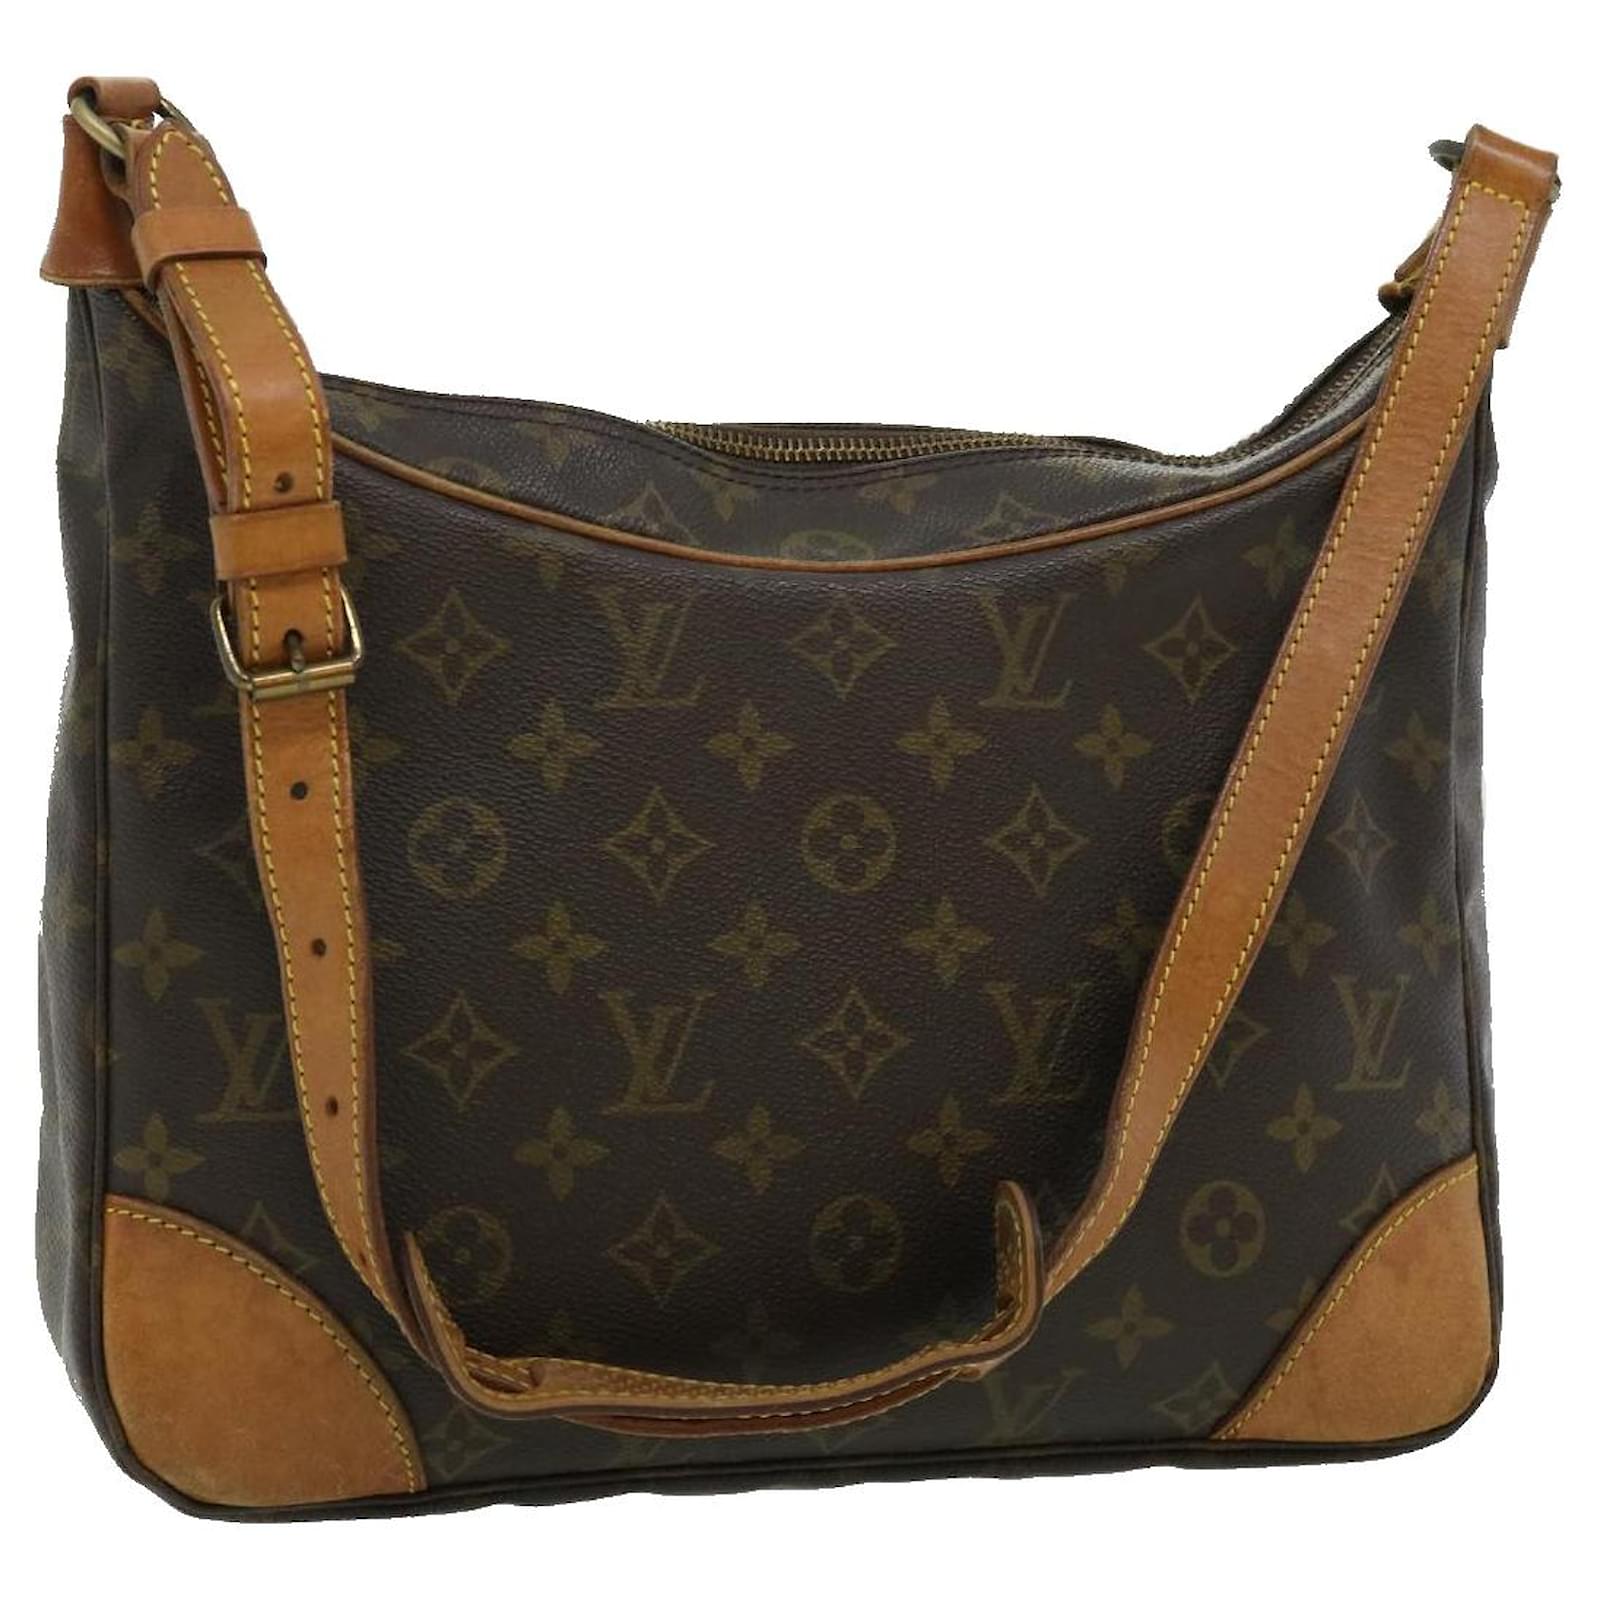 FWRD Renew Louis Vuitton Monogram Satin Boulogne Shoulder Bag in